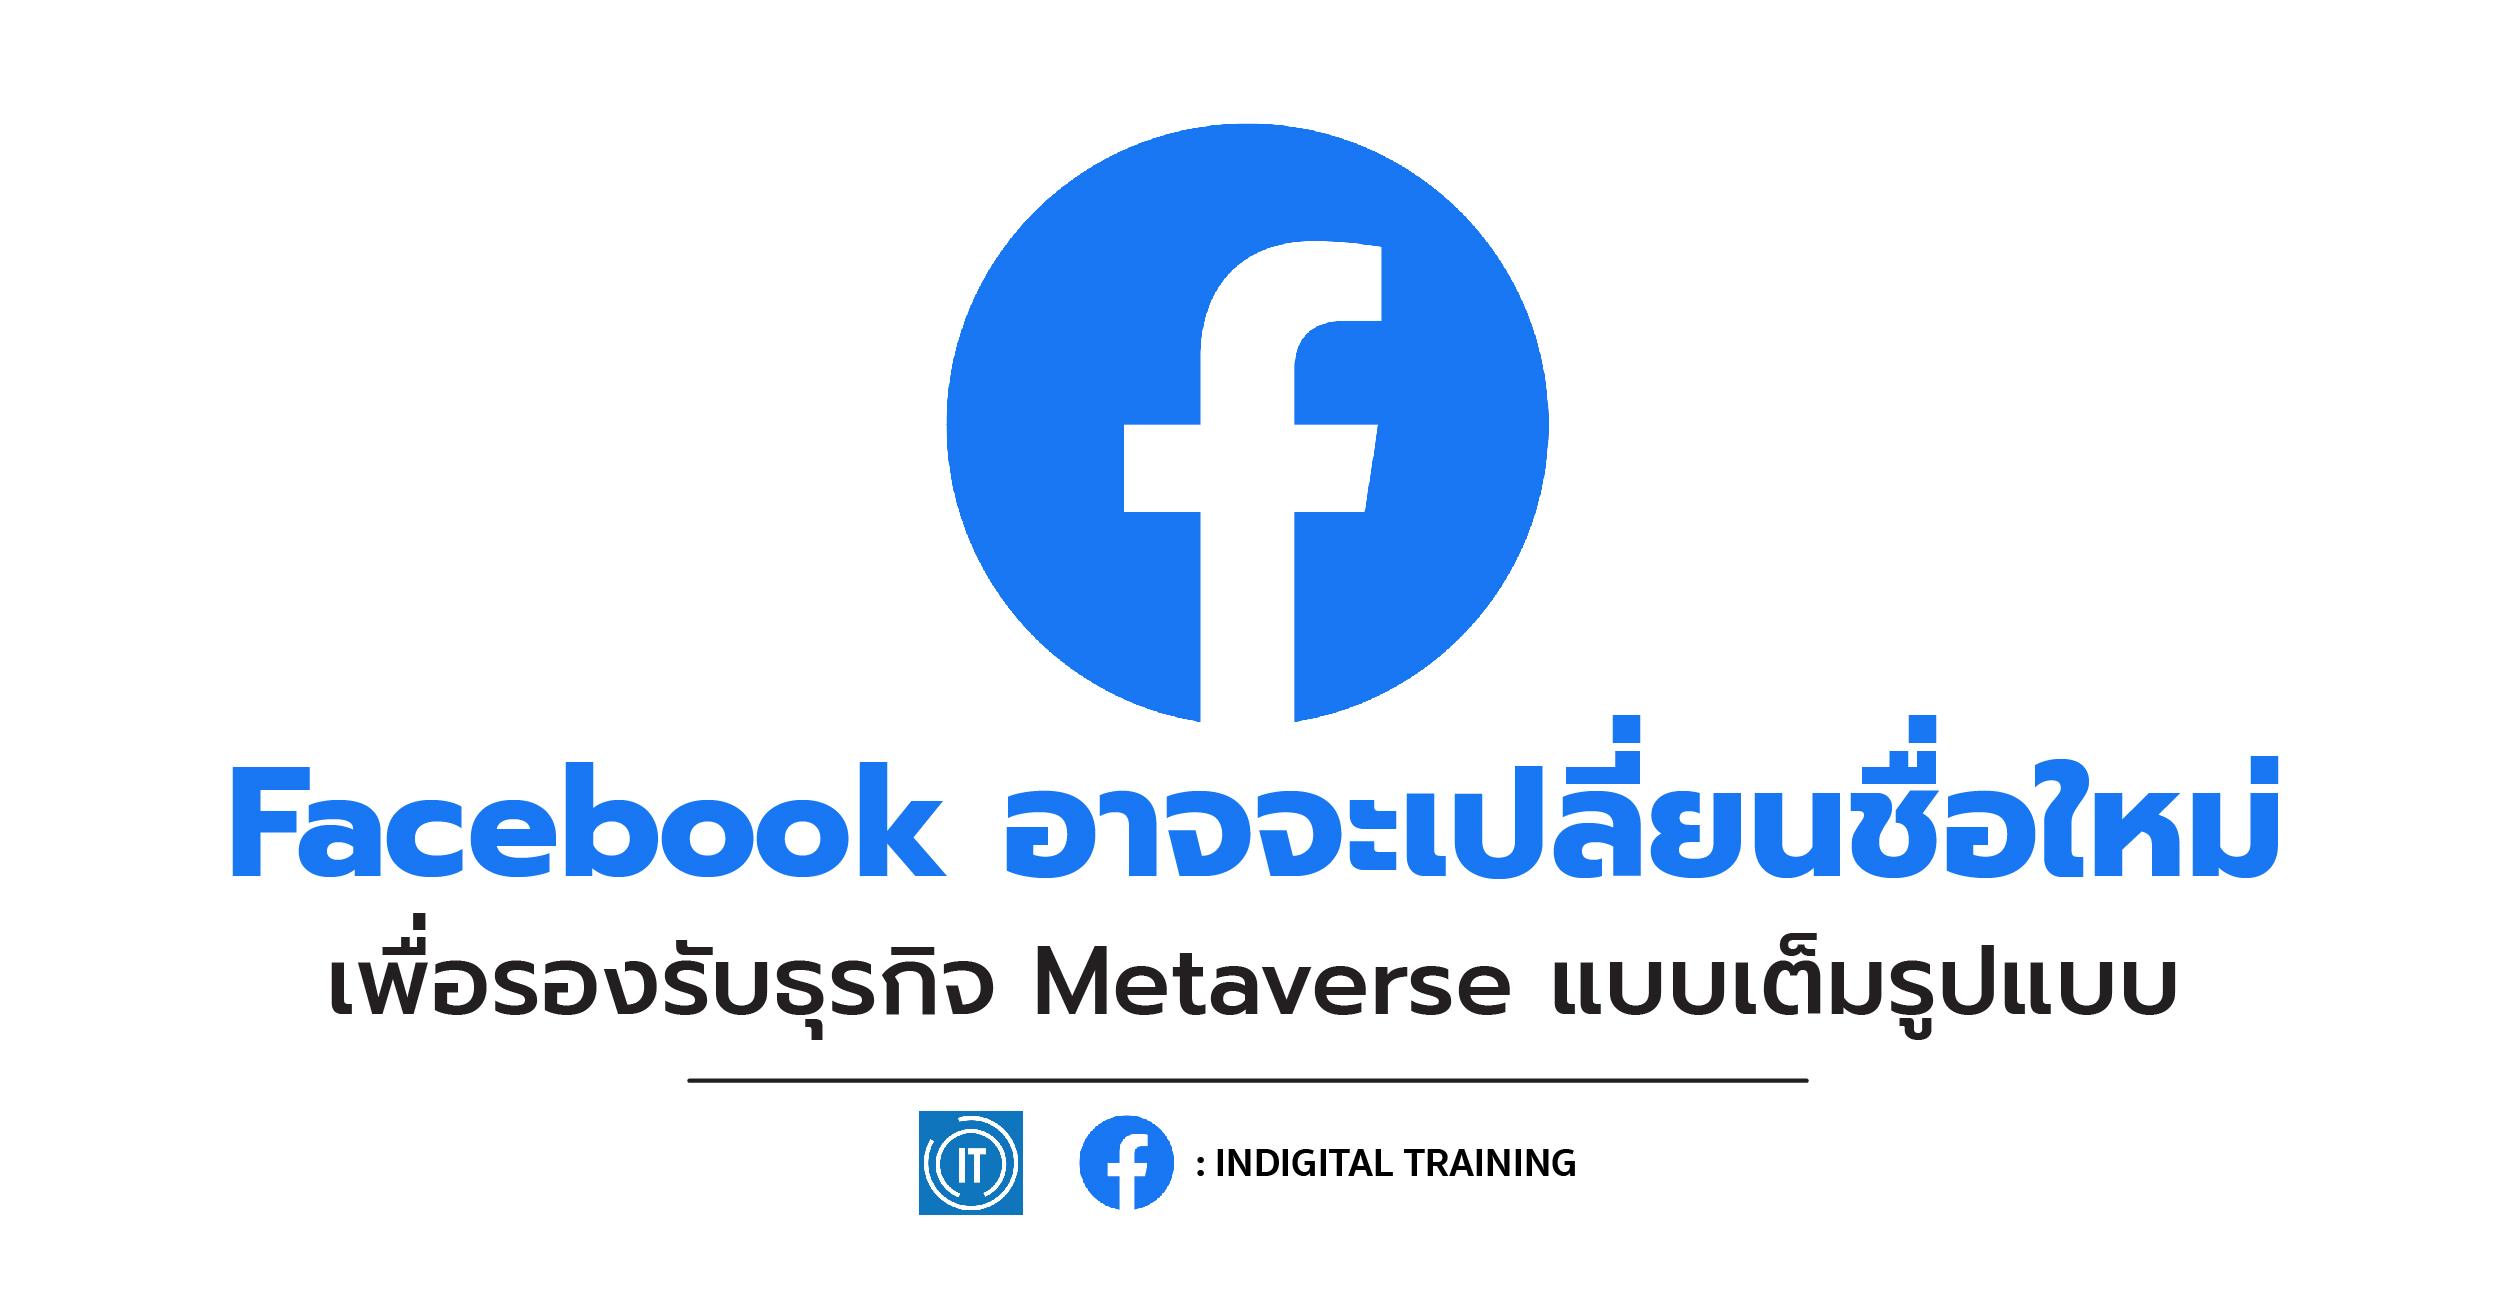 Facebook อาจจะเปลี่ยนชื่อใหม่ เพื่อรองรับธุรกิจ Metaverse แบบเต็มรูปแบบ